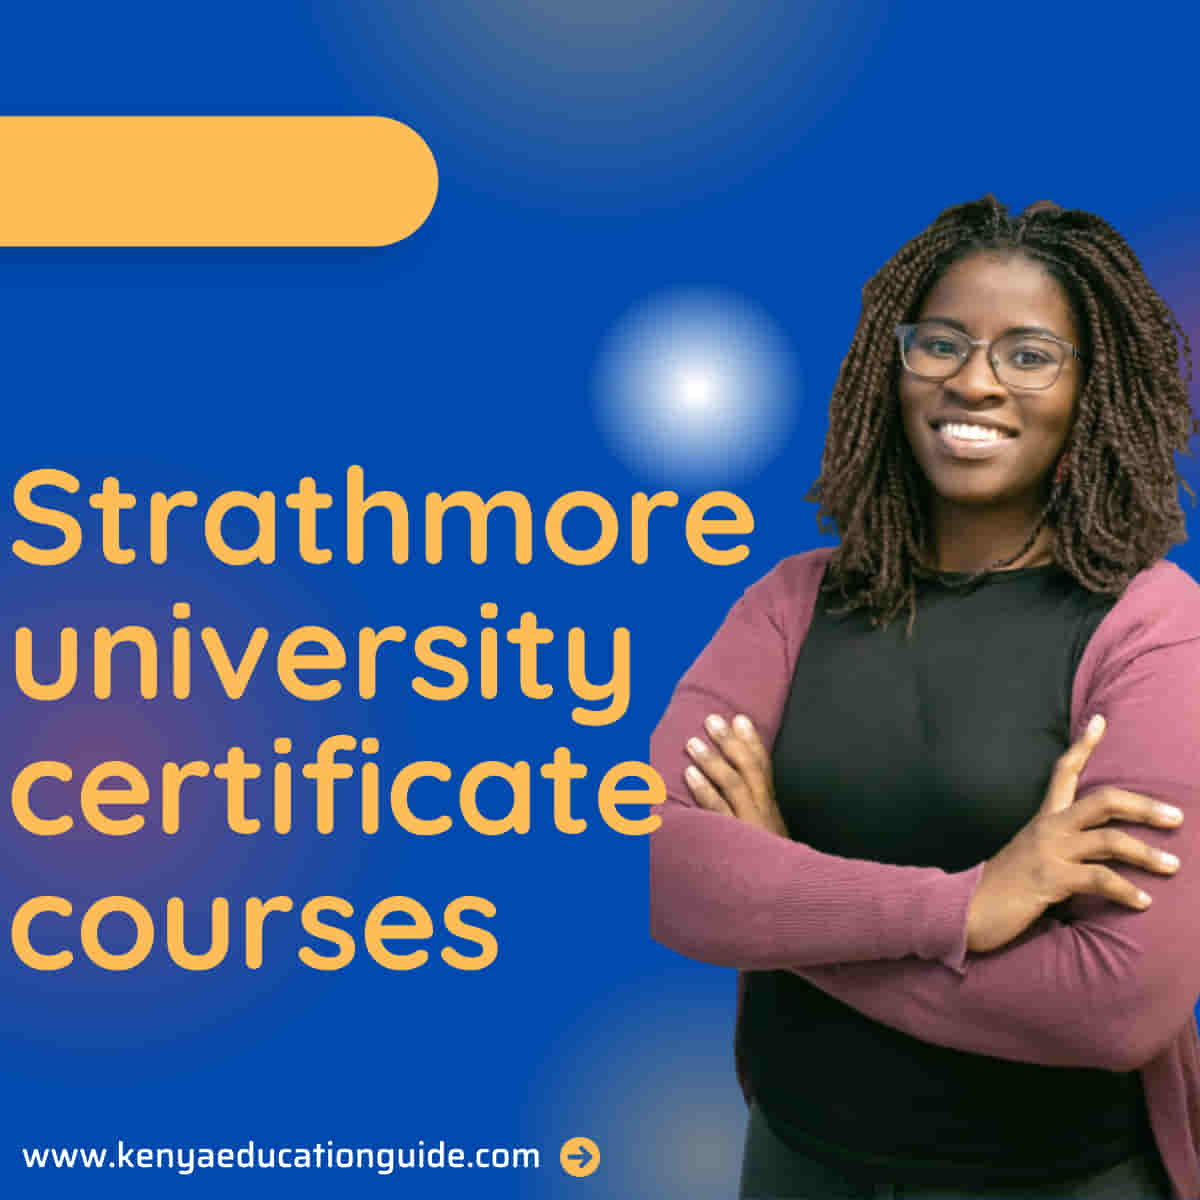 Strathmore university certificate courses